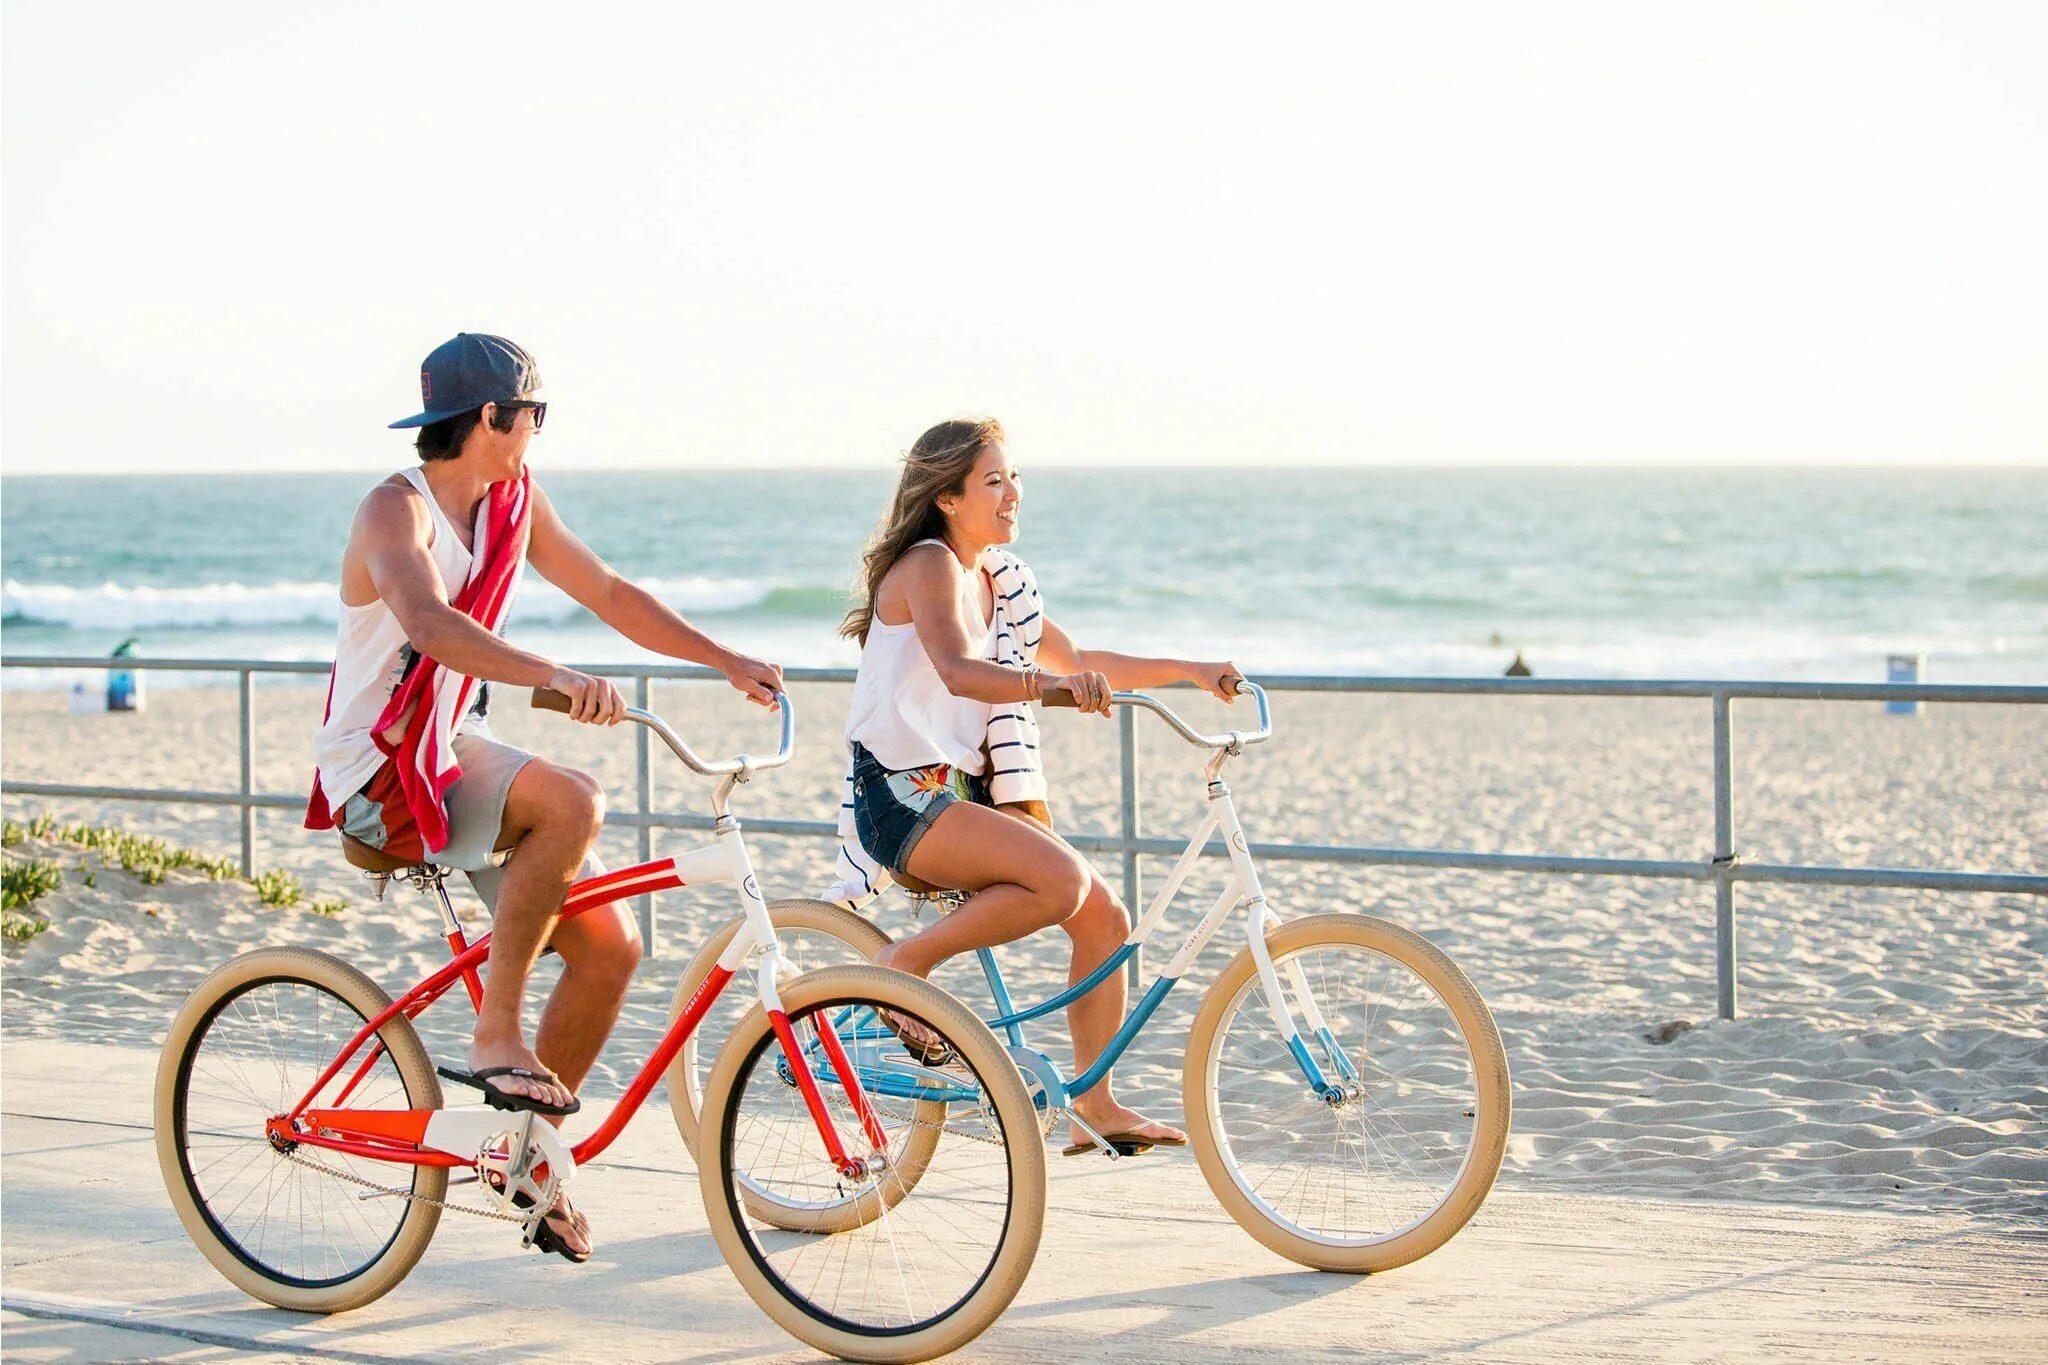 Велосипед на пляже. Велосипед пляжный круизер. Круизер велосипед пляж. Тайланд велосипед.